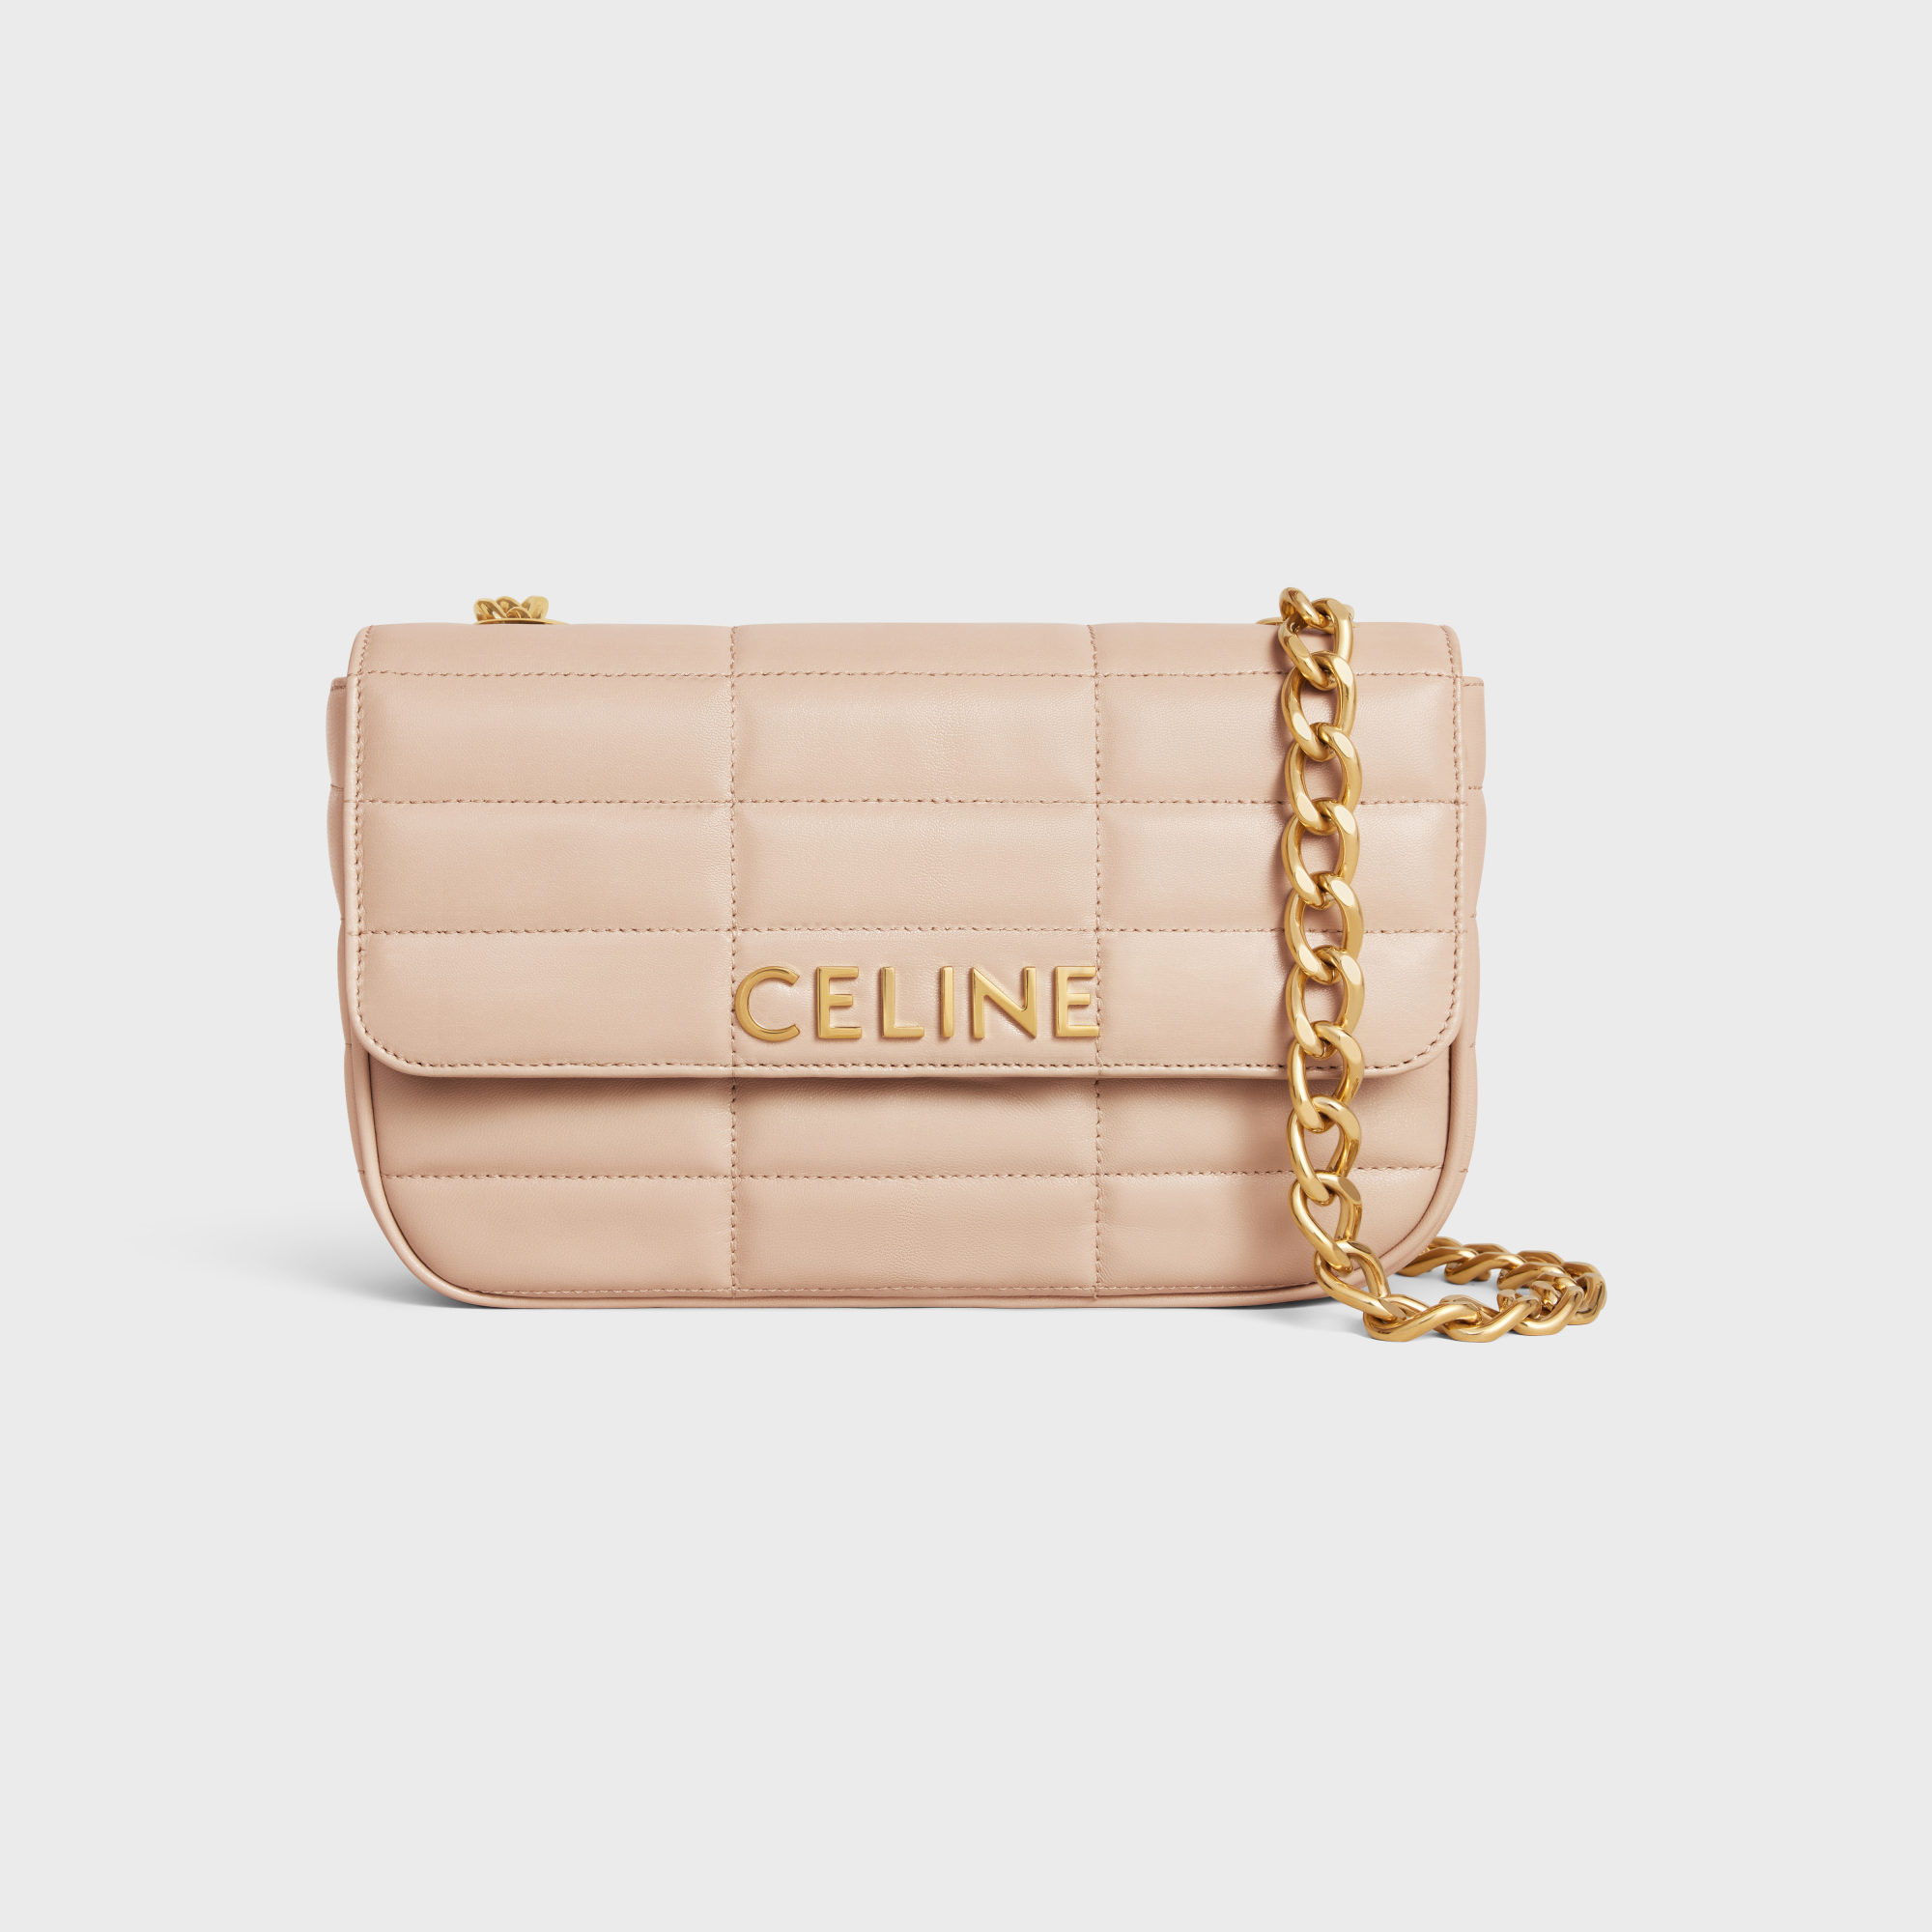 Celine Hedi Slimane Marin Logo Canvas Calfskin Wristlet Pouch Clutch Bag